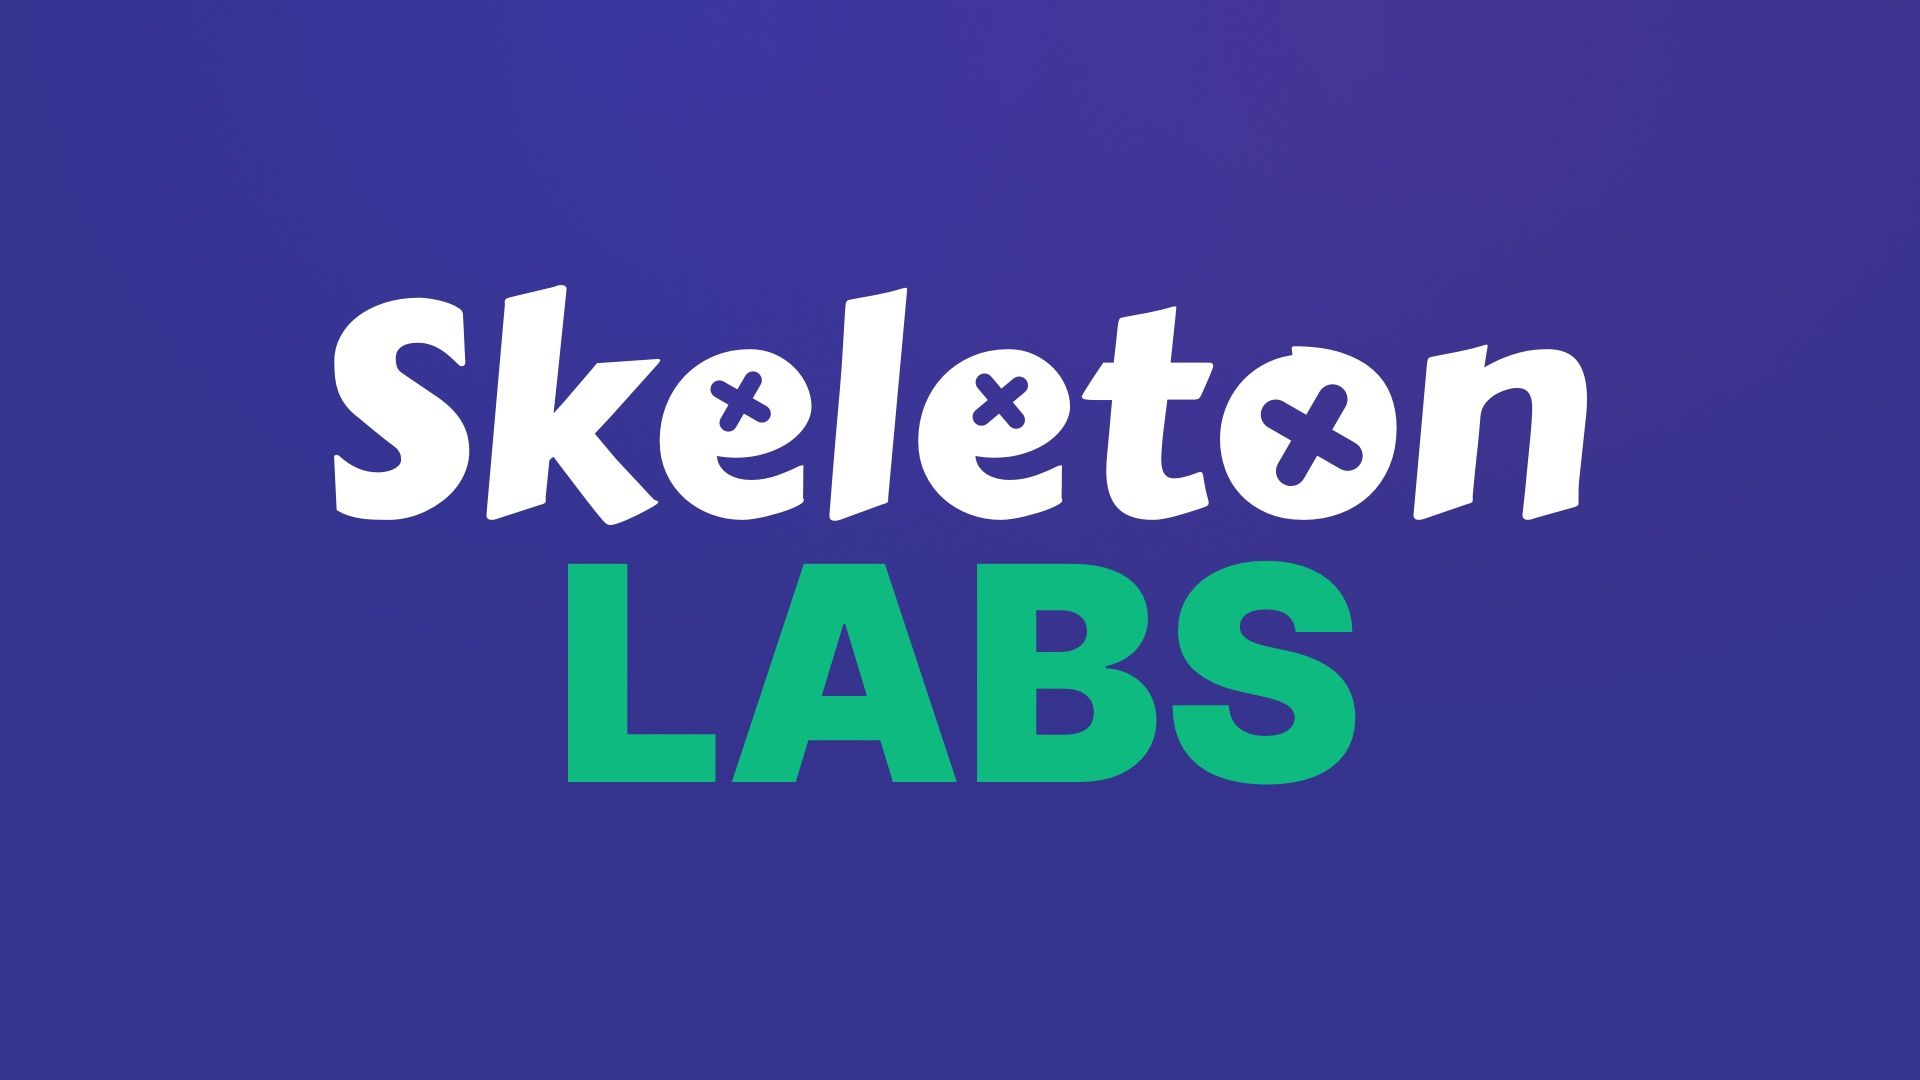 Introducing Skeleton Labs